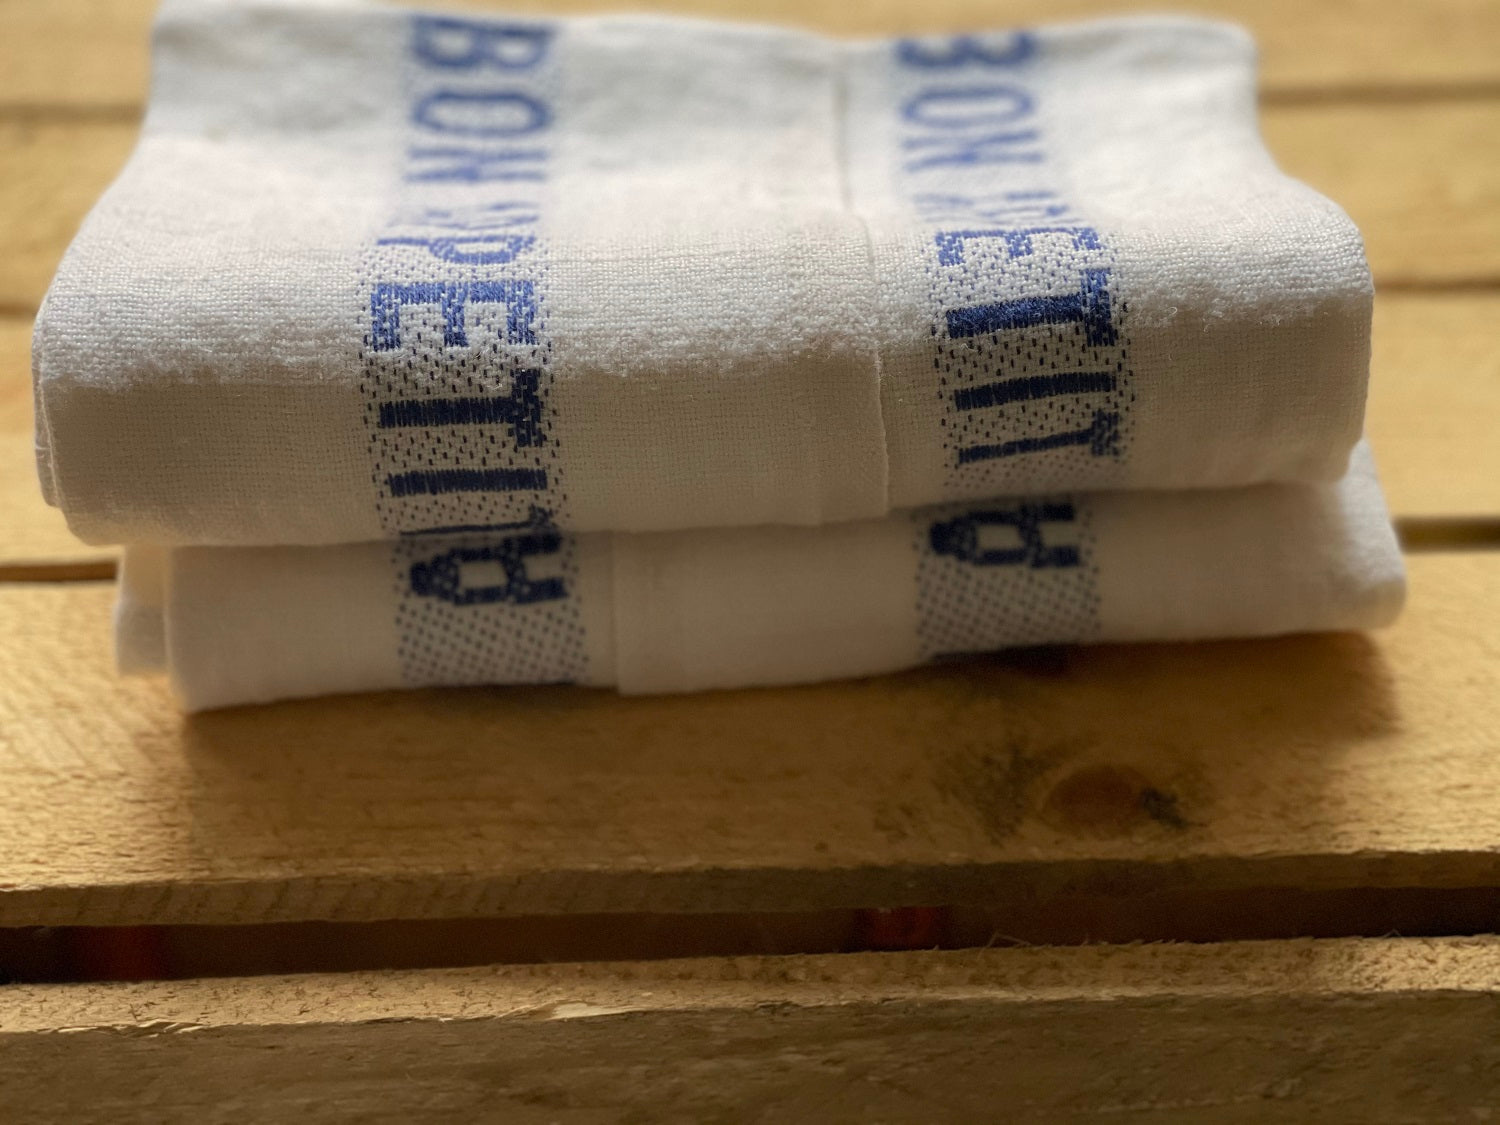 Charvet Editions "Bon Appetit" (Blue), White woven linen tea towel. Made in France.